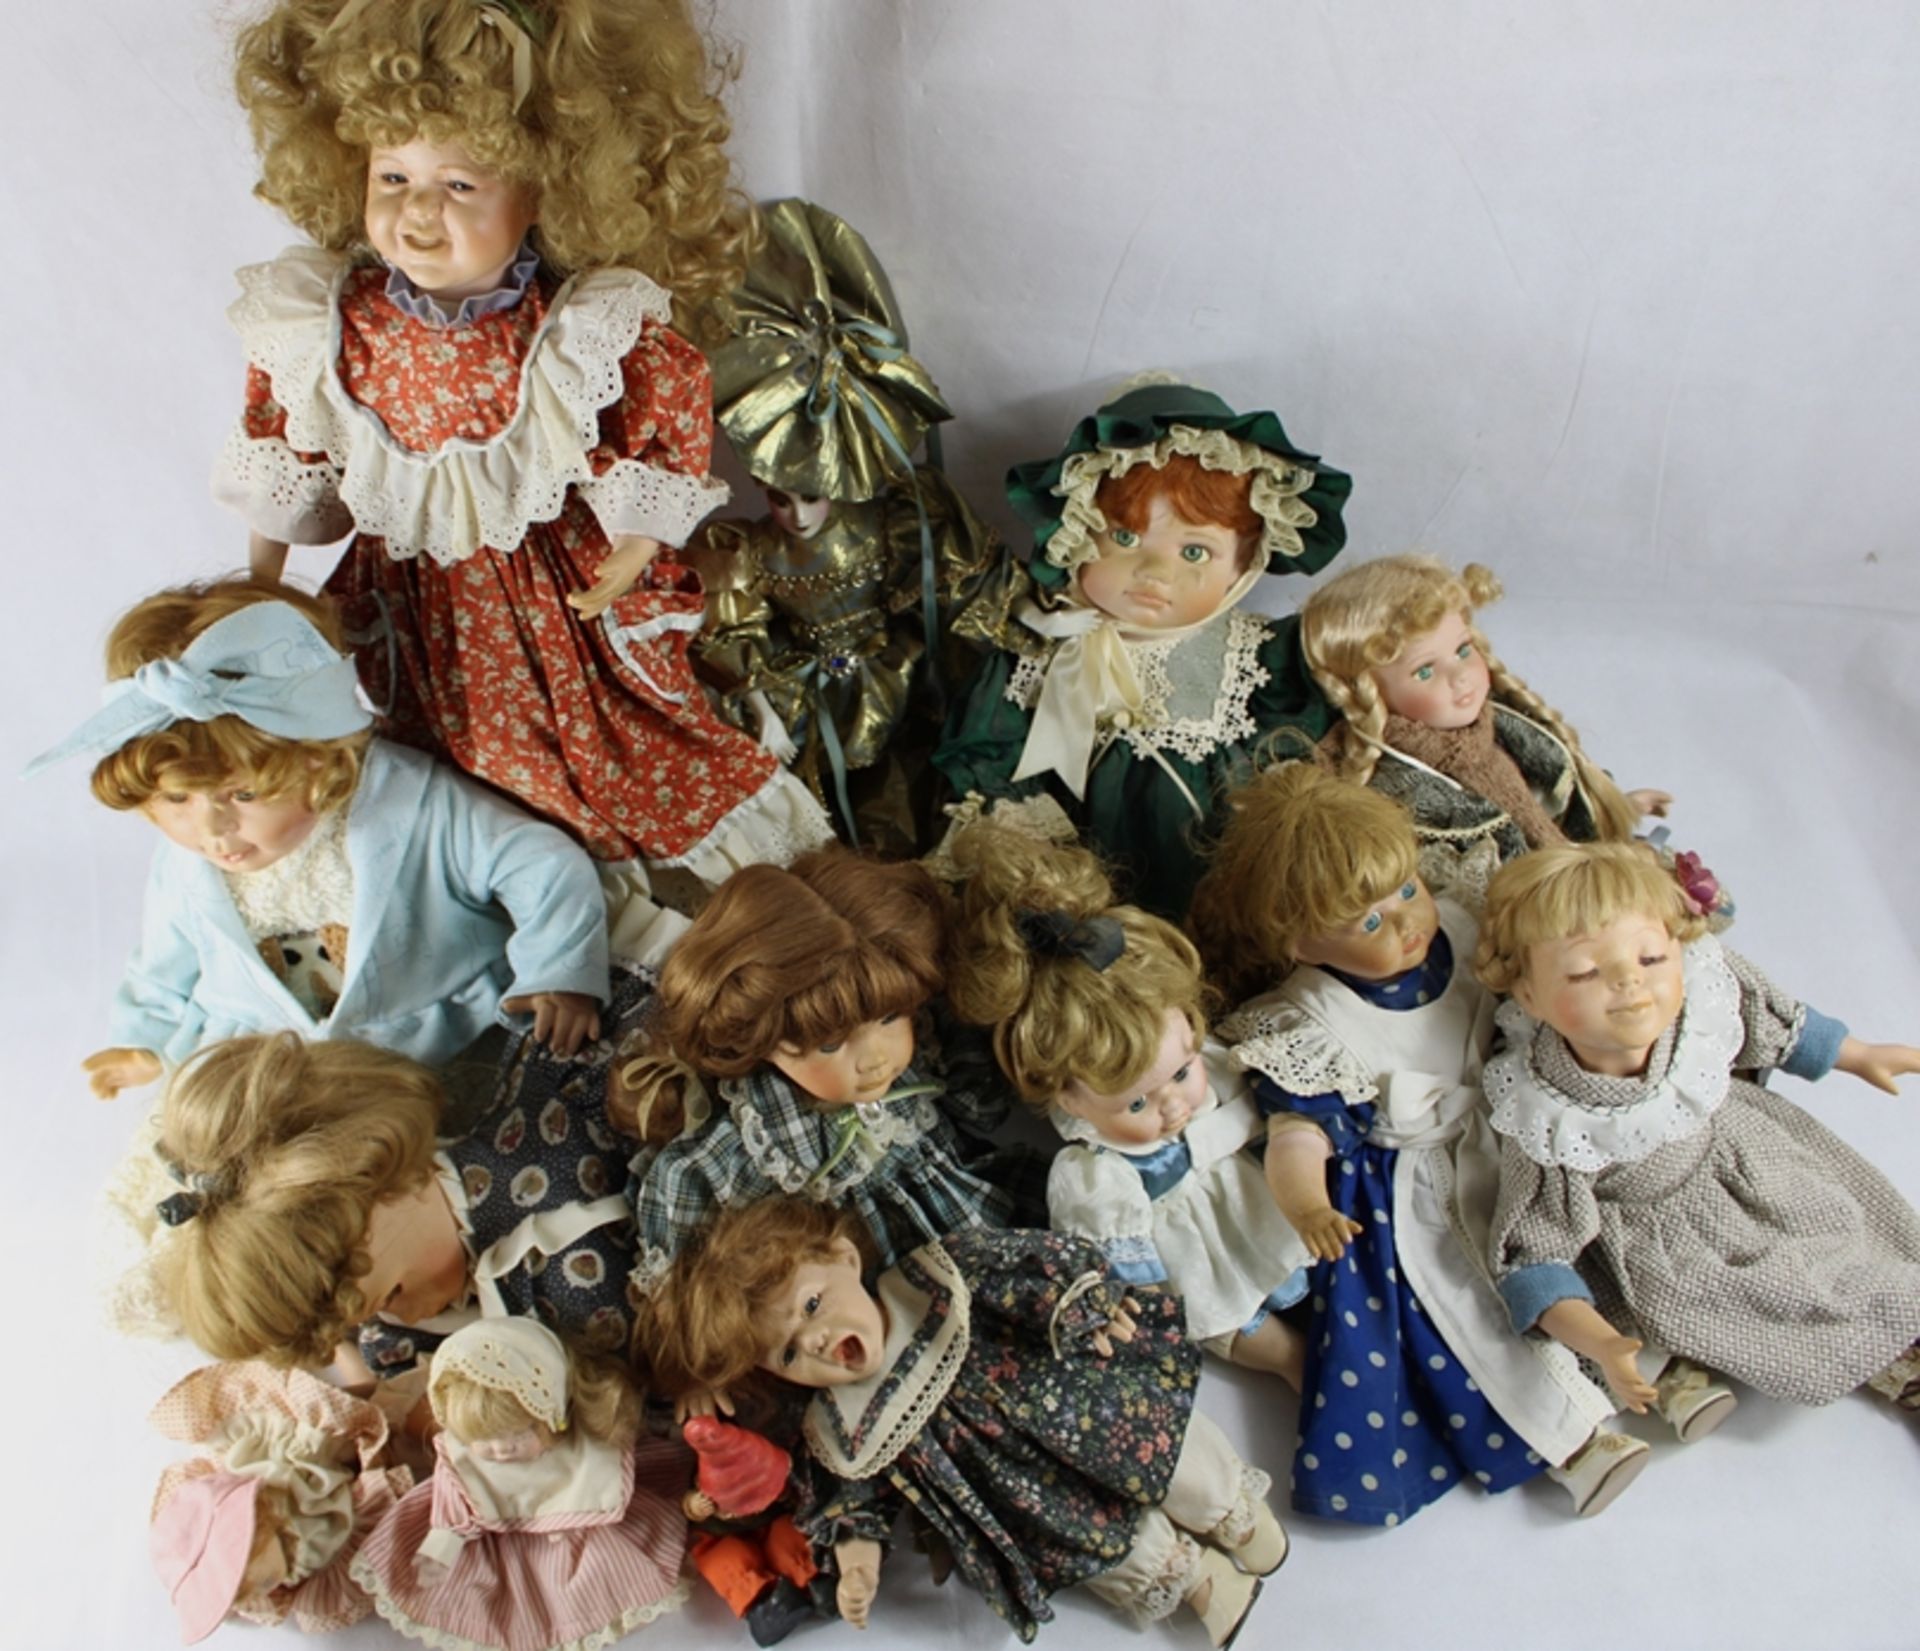 Puppen etc. Konvolut ca. 14 St., verschmutzt - Bild 2 aus 2